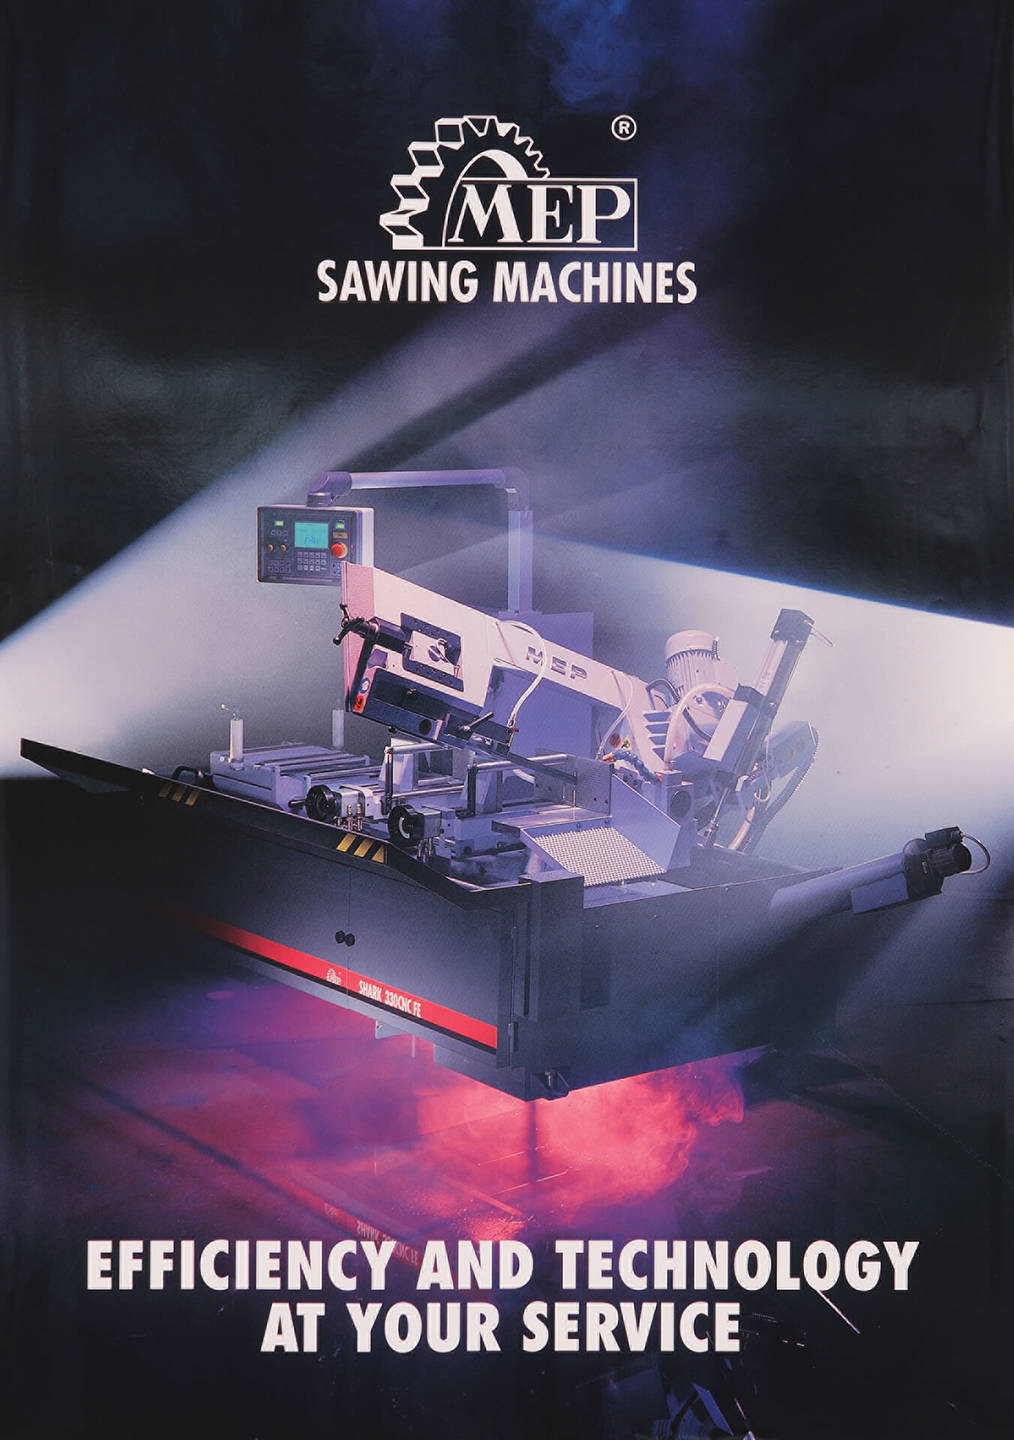 Band sawing machines of Mep Segatrici  | © MEP S.p.A. - Circular and band sawing machines to cut metals